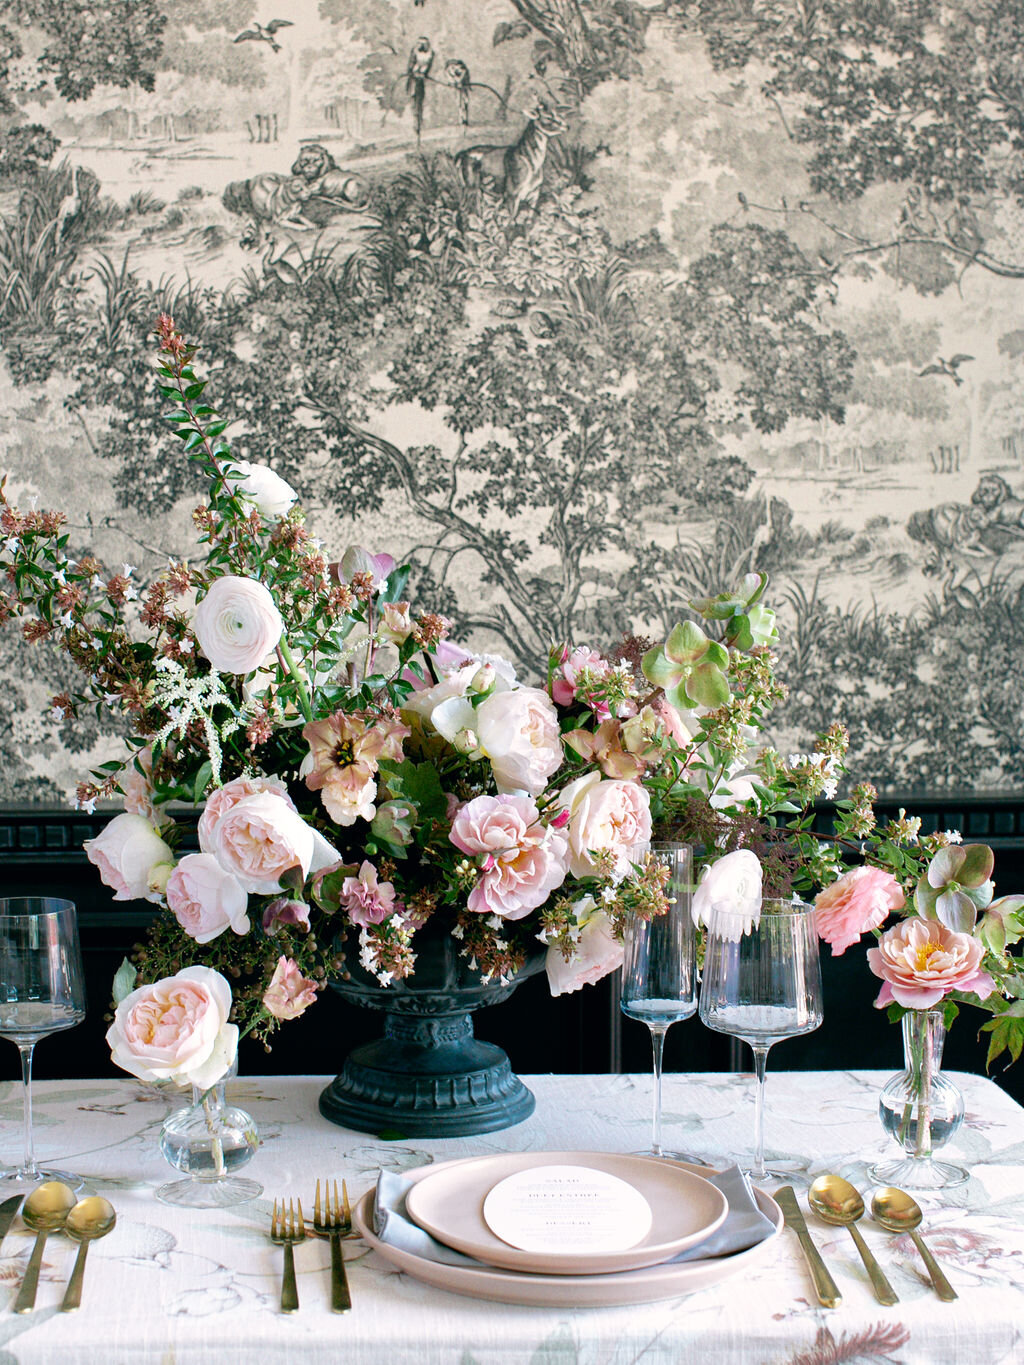 max-owens-design-english-floral-wedding-05-hellebore-garden-roses